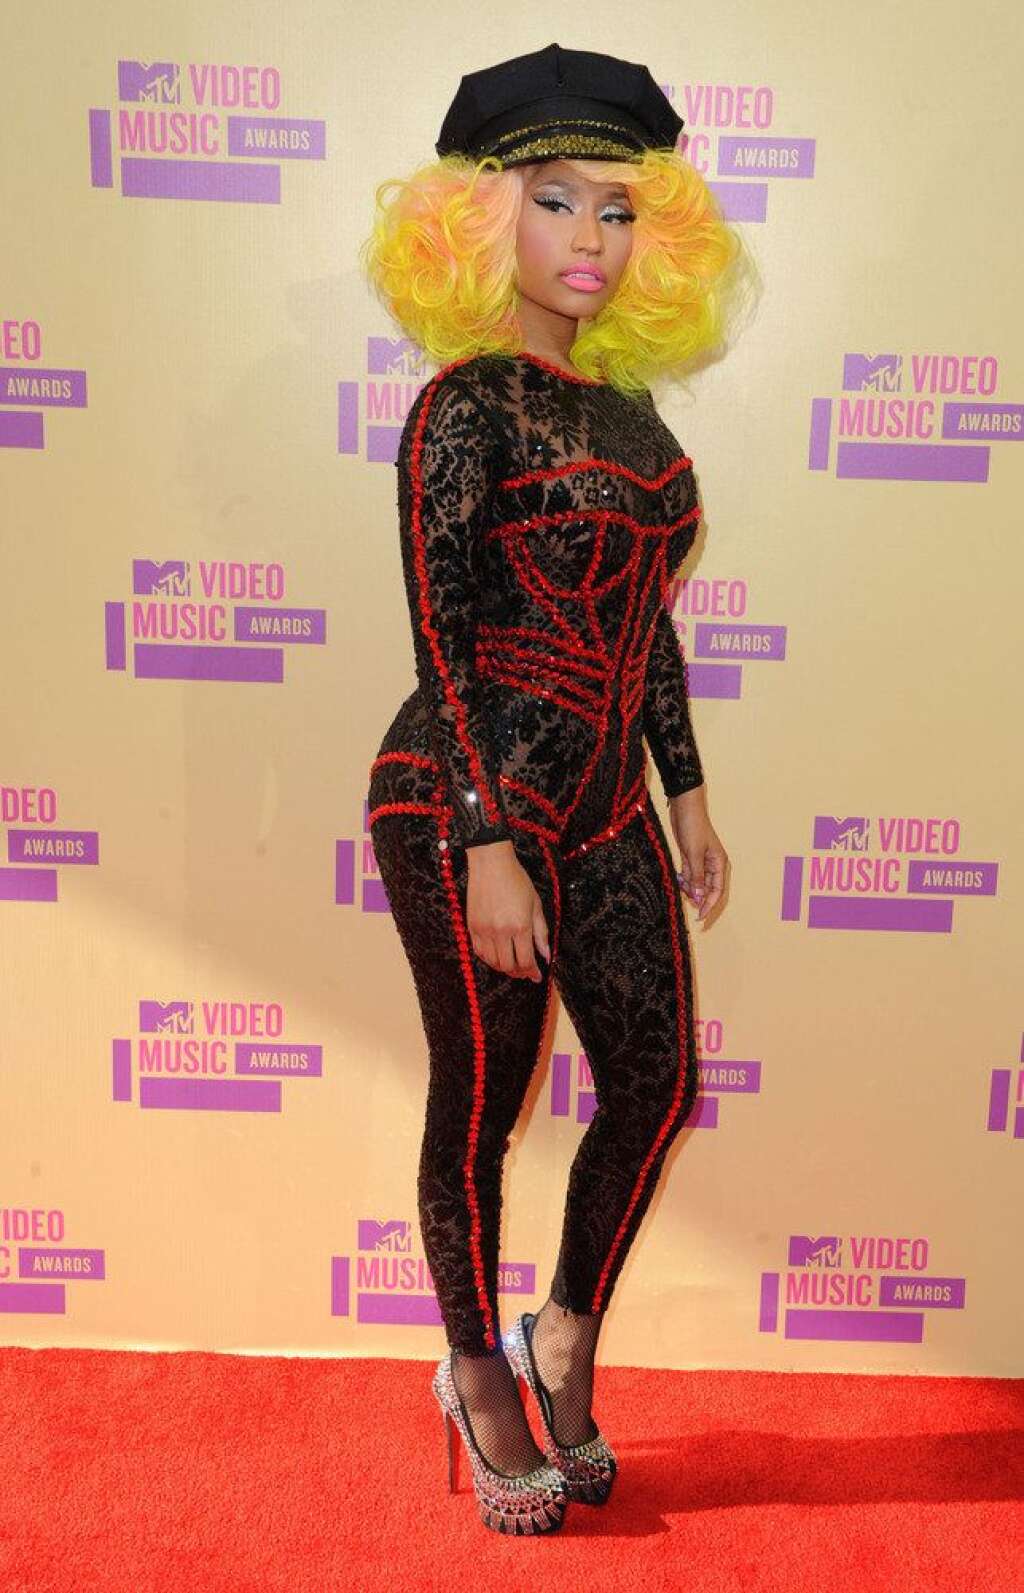 MTV VMA 2012 Arrivals - Los Angeles - Nikki Minaj arriving at the MTV Video Music Awards at the Staples Centre, Los Angeles.